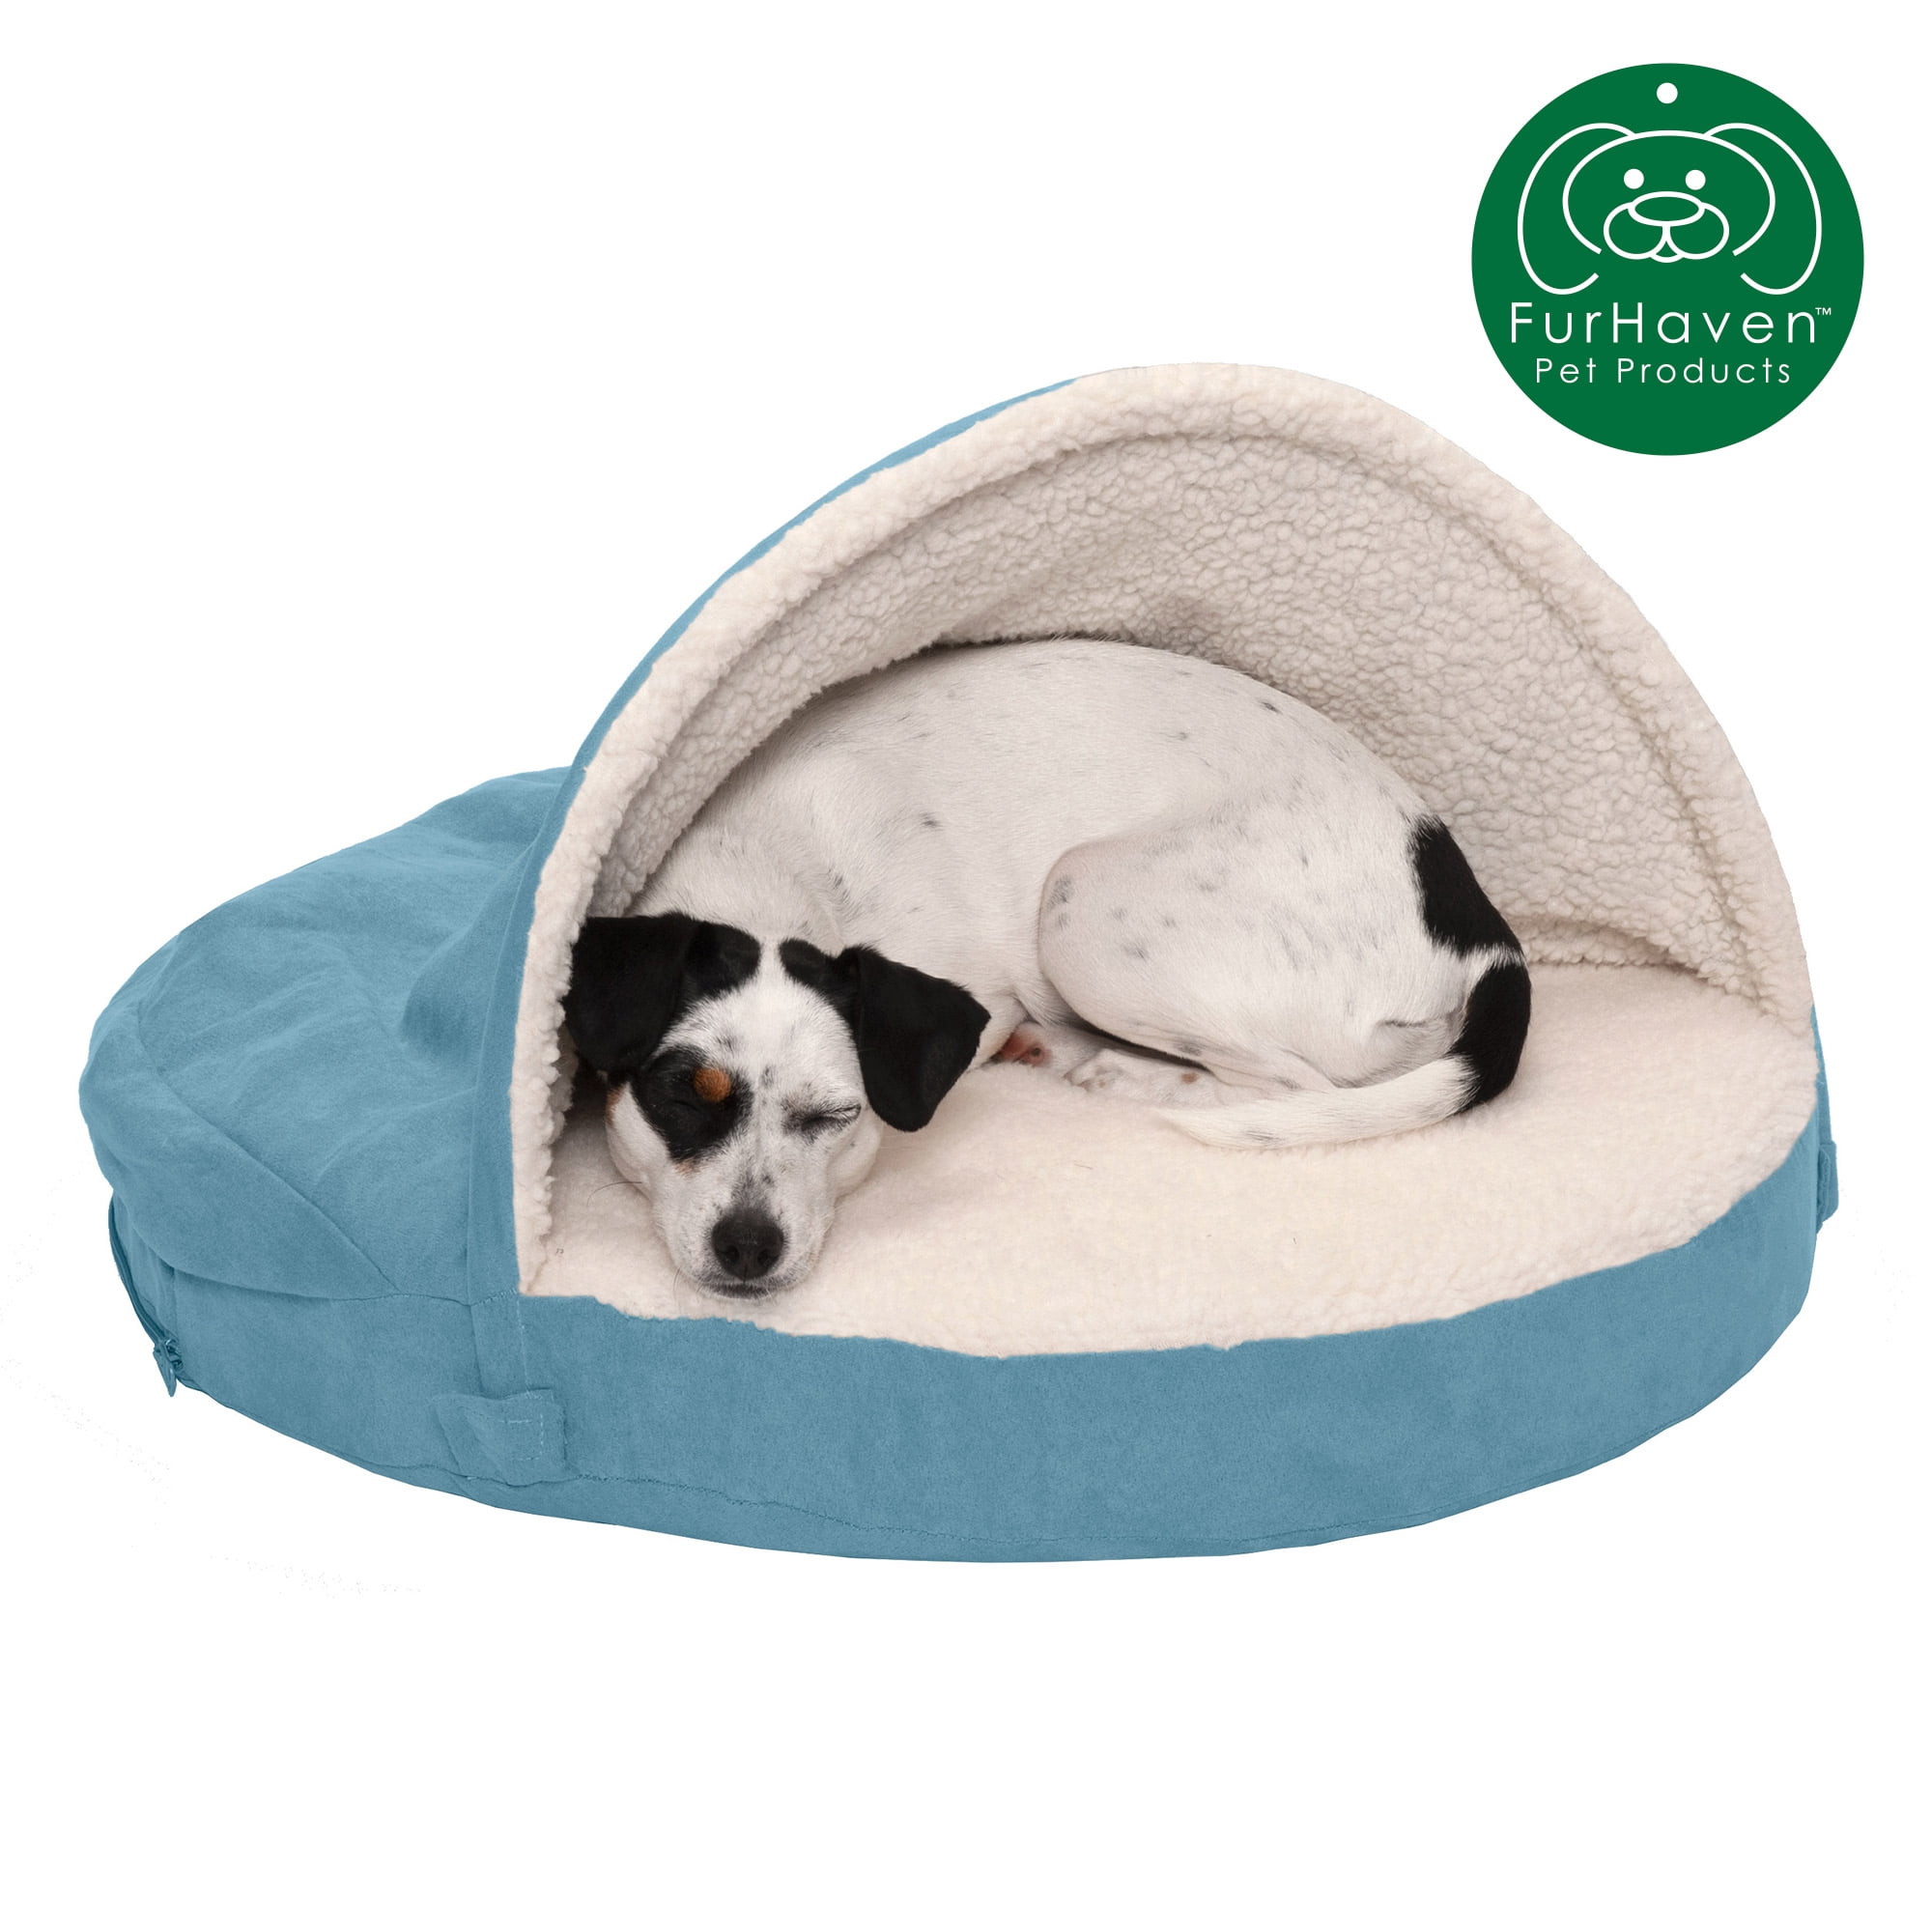 Soft dog bed Puppy bed Pastel Pastel colour dog bed Trendy dog bed Dog bed